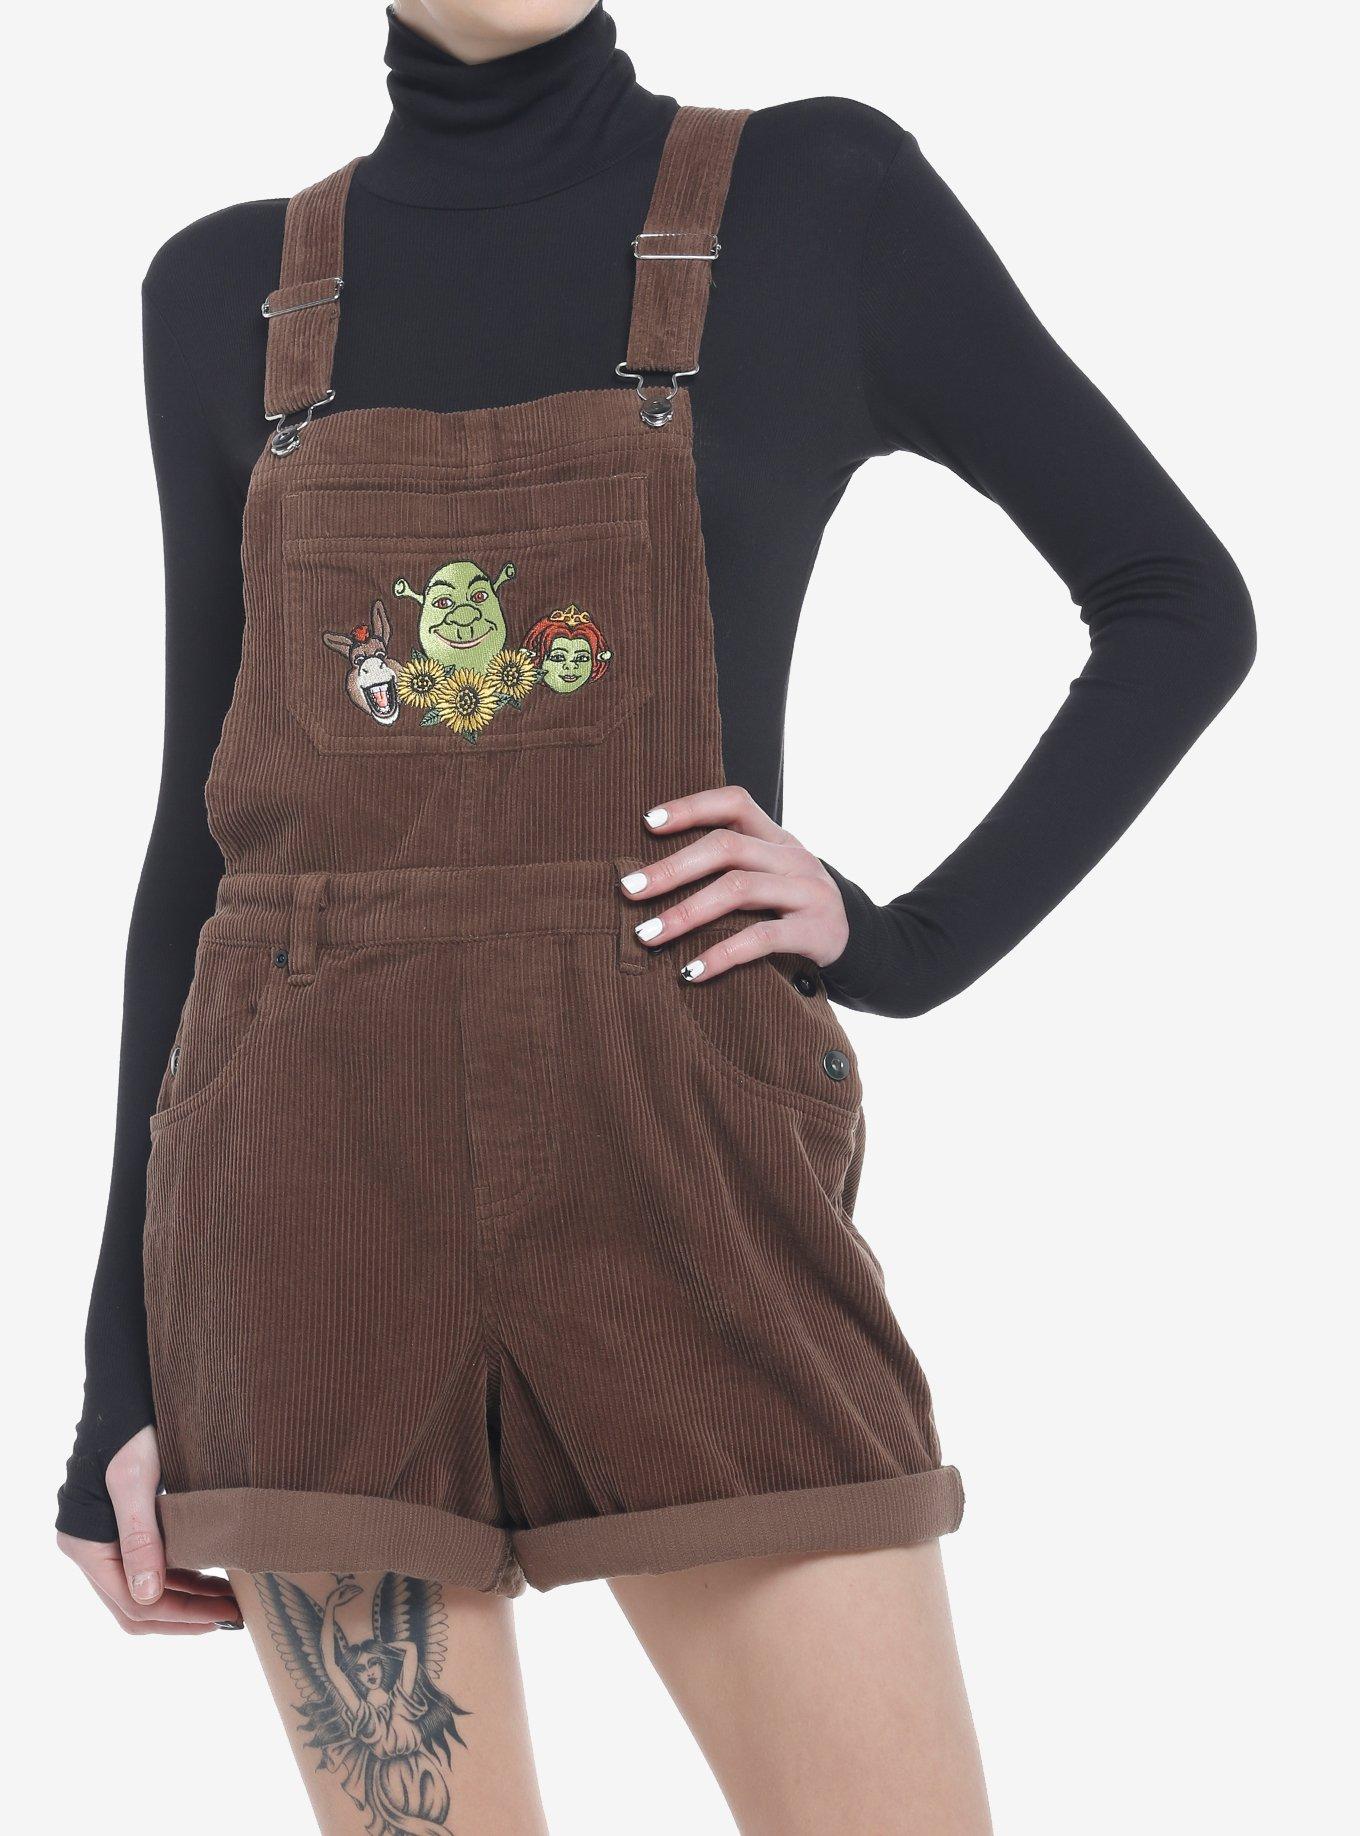 Shrek Embroidered Topic Shortalls Corduroy | Hot